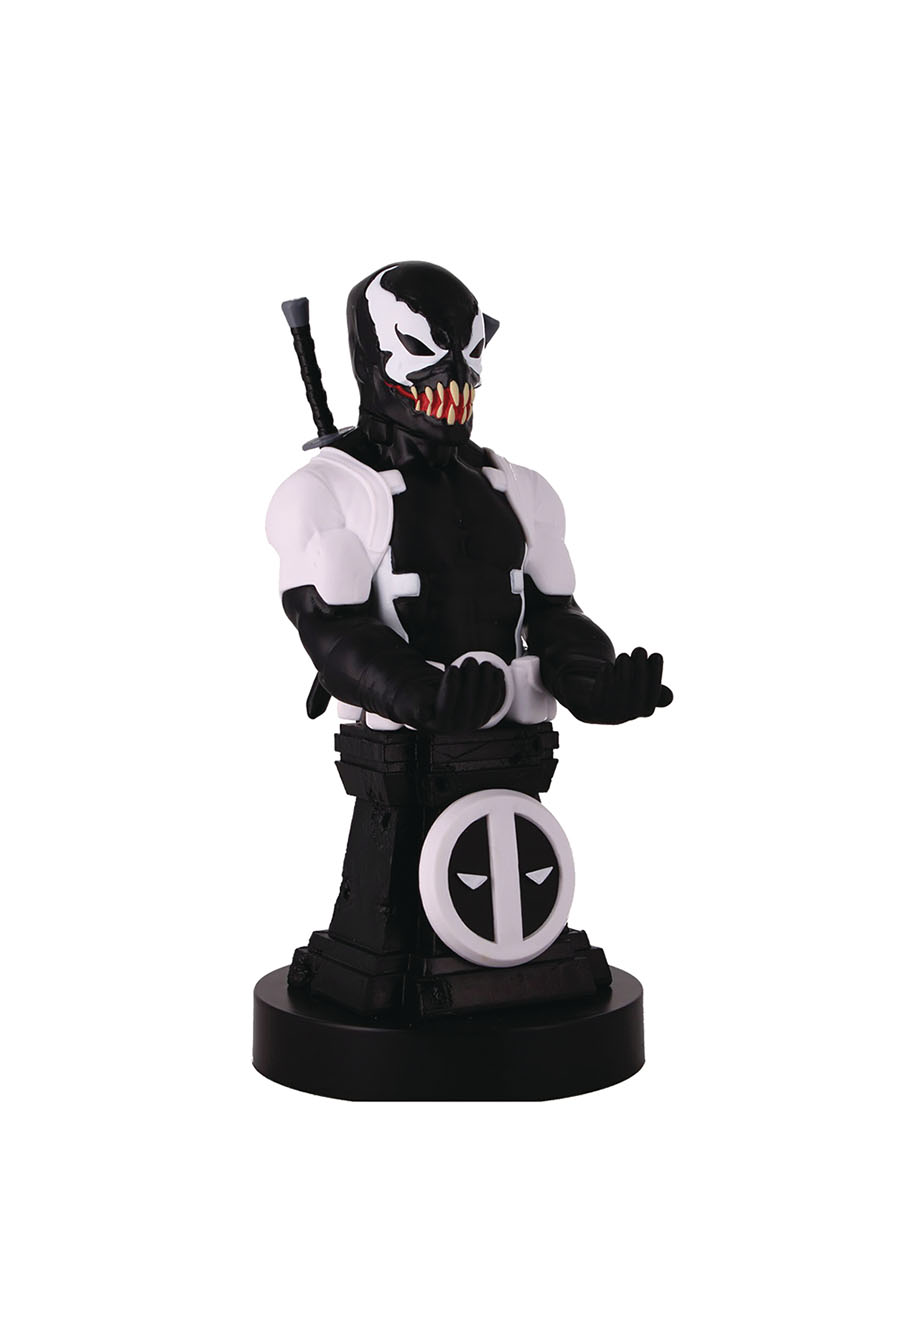 Marvel Cable Guy - Deadpool (Back In Black)